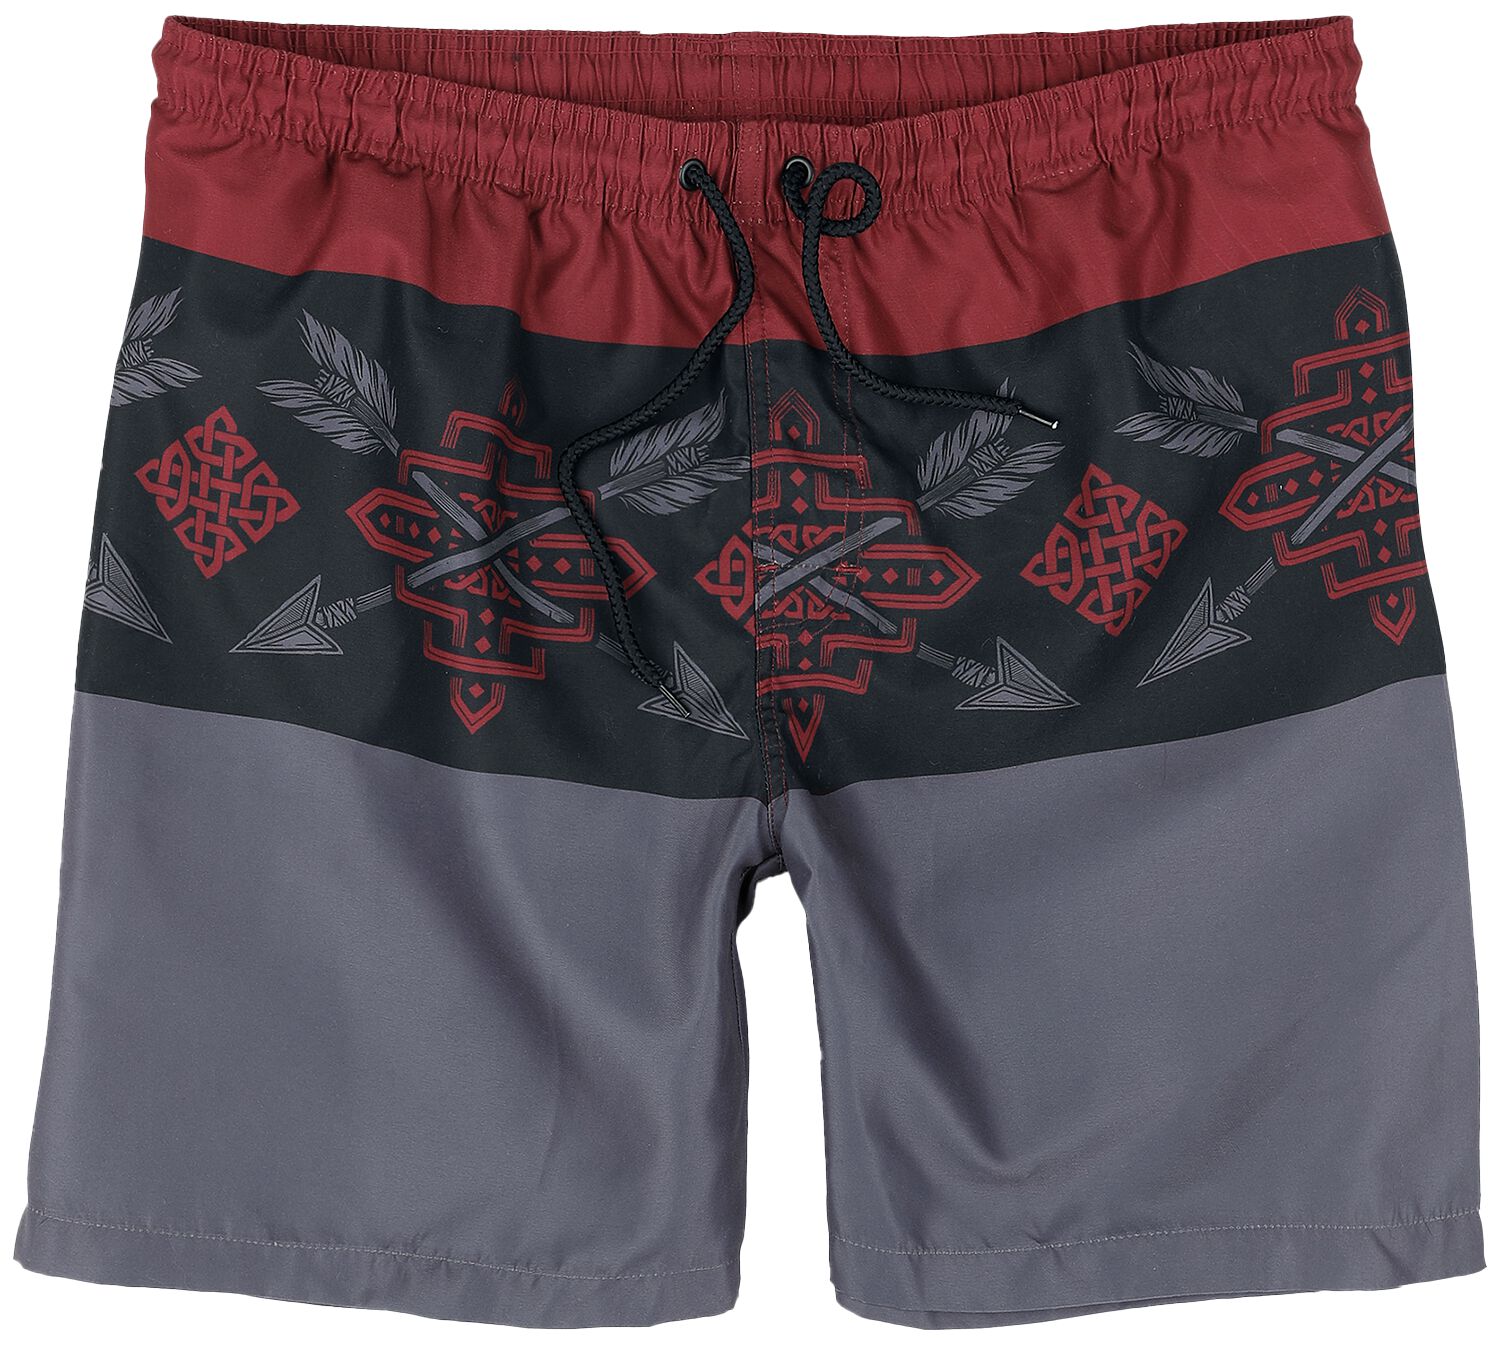 Black Premium by EMP Tricolor Swim Shorts with Arrow Print Badeshort rot schwarz in S